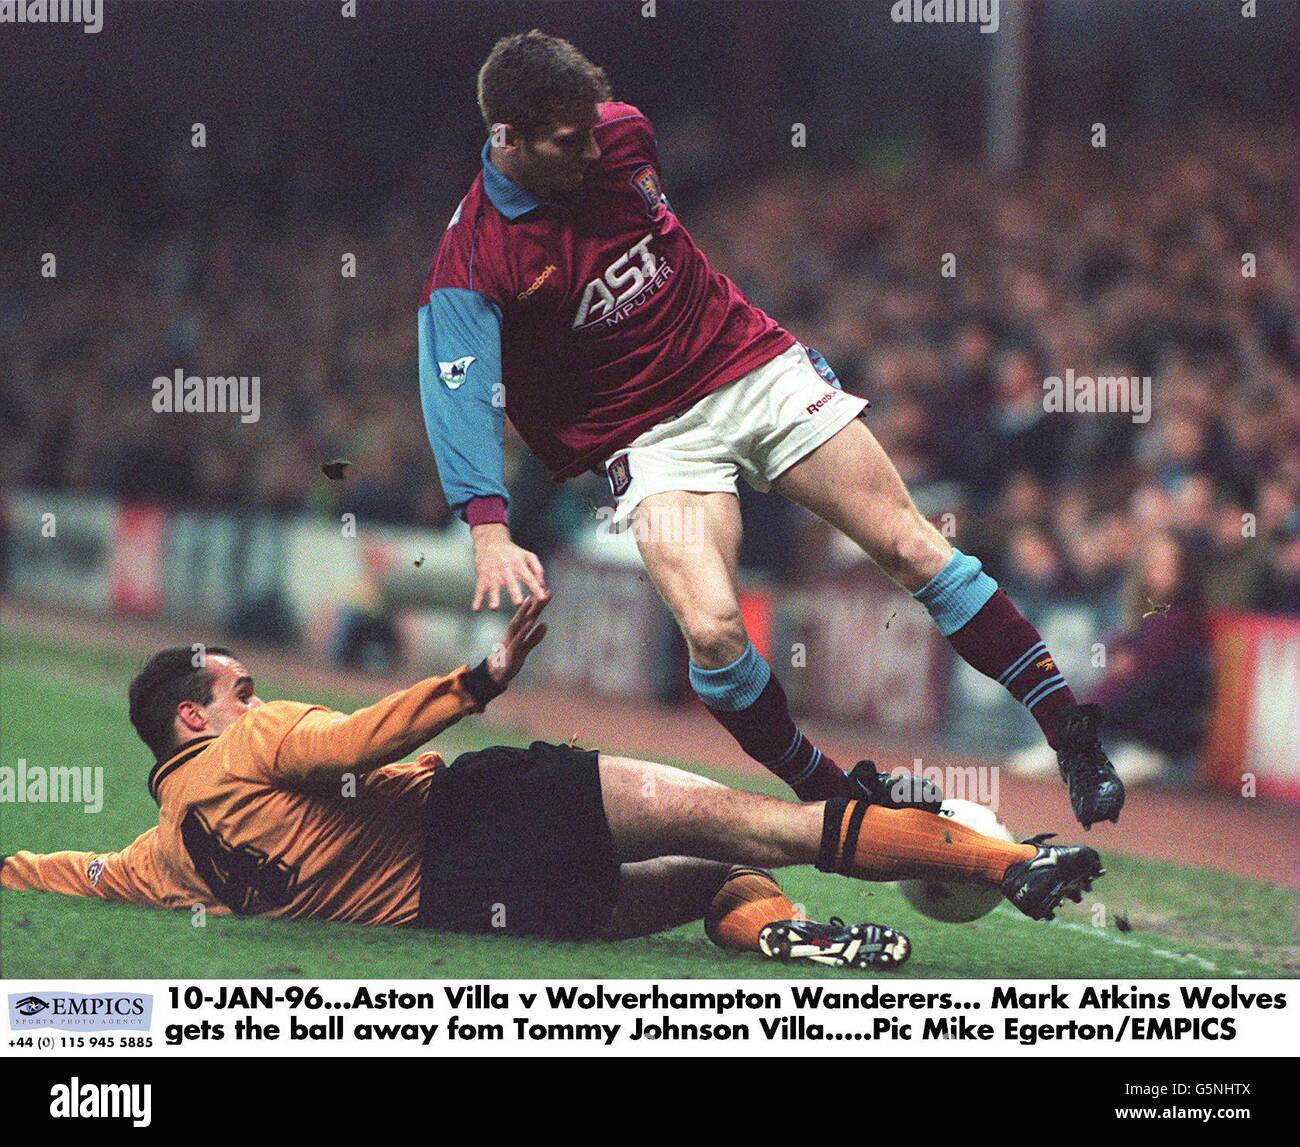 10-JAN-96. Aston Villa / Wolverhampton Wanderers. Mark Atkins Wolves bekommt den Ball weg von Tommy Johnson Villa Stockfoto